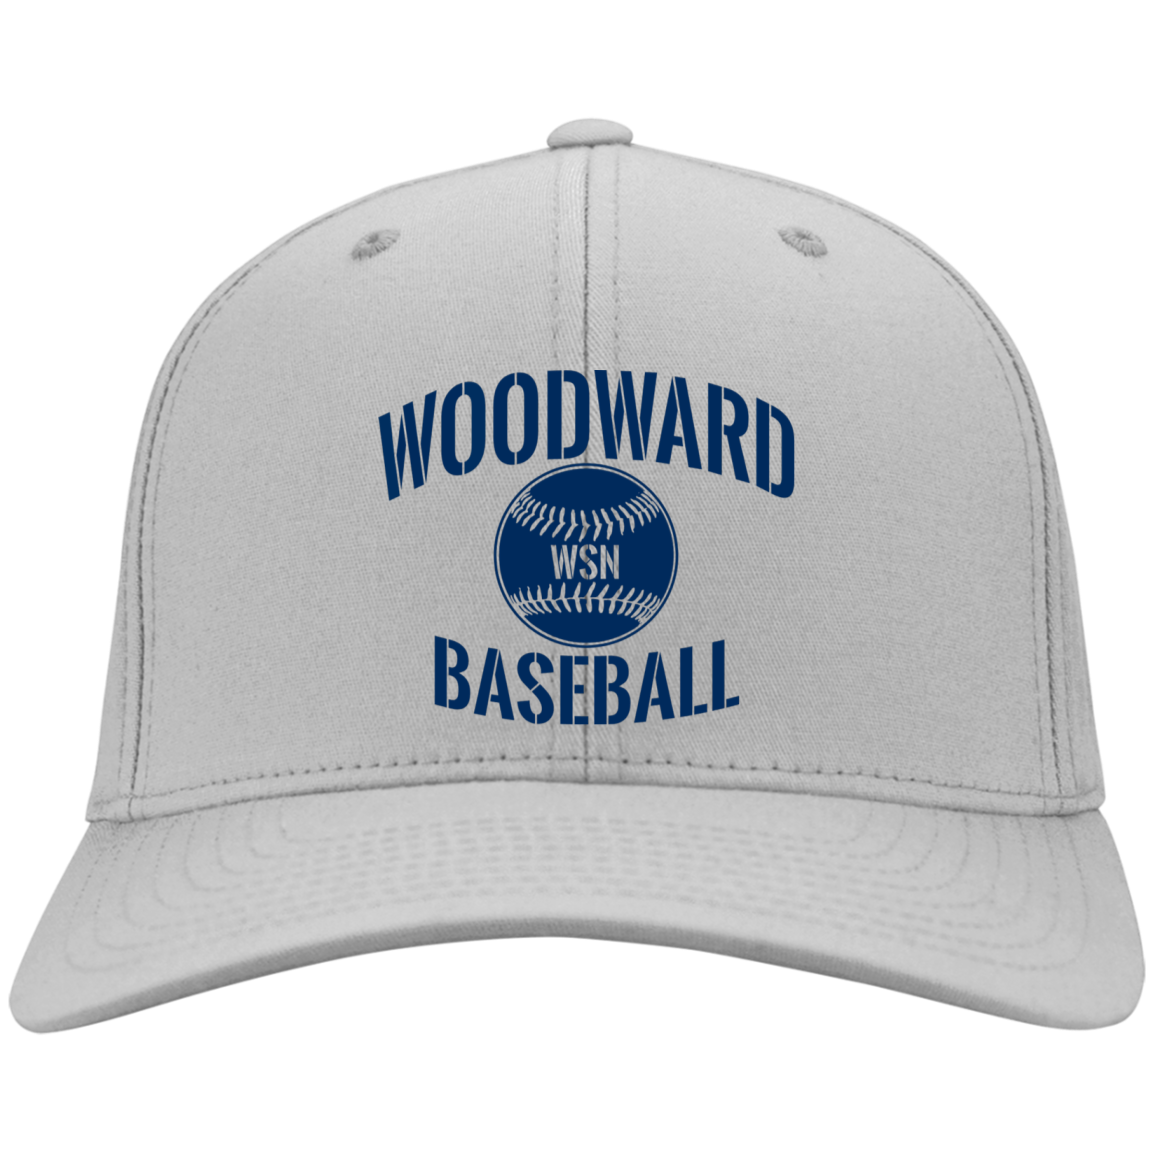 WOODWARD BASEBALL Embroidered Twill Cap